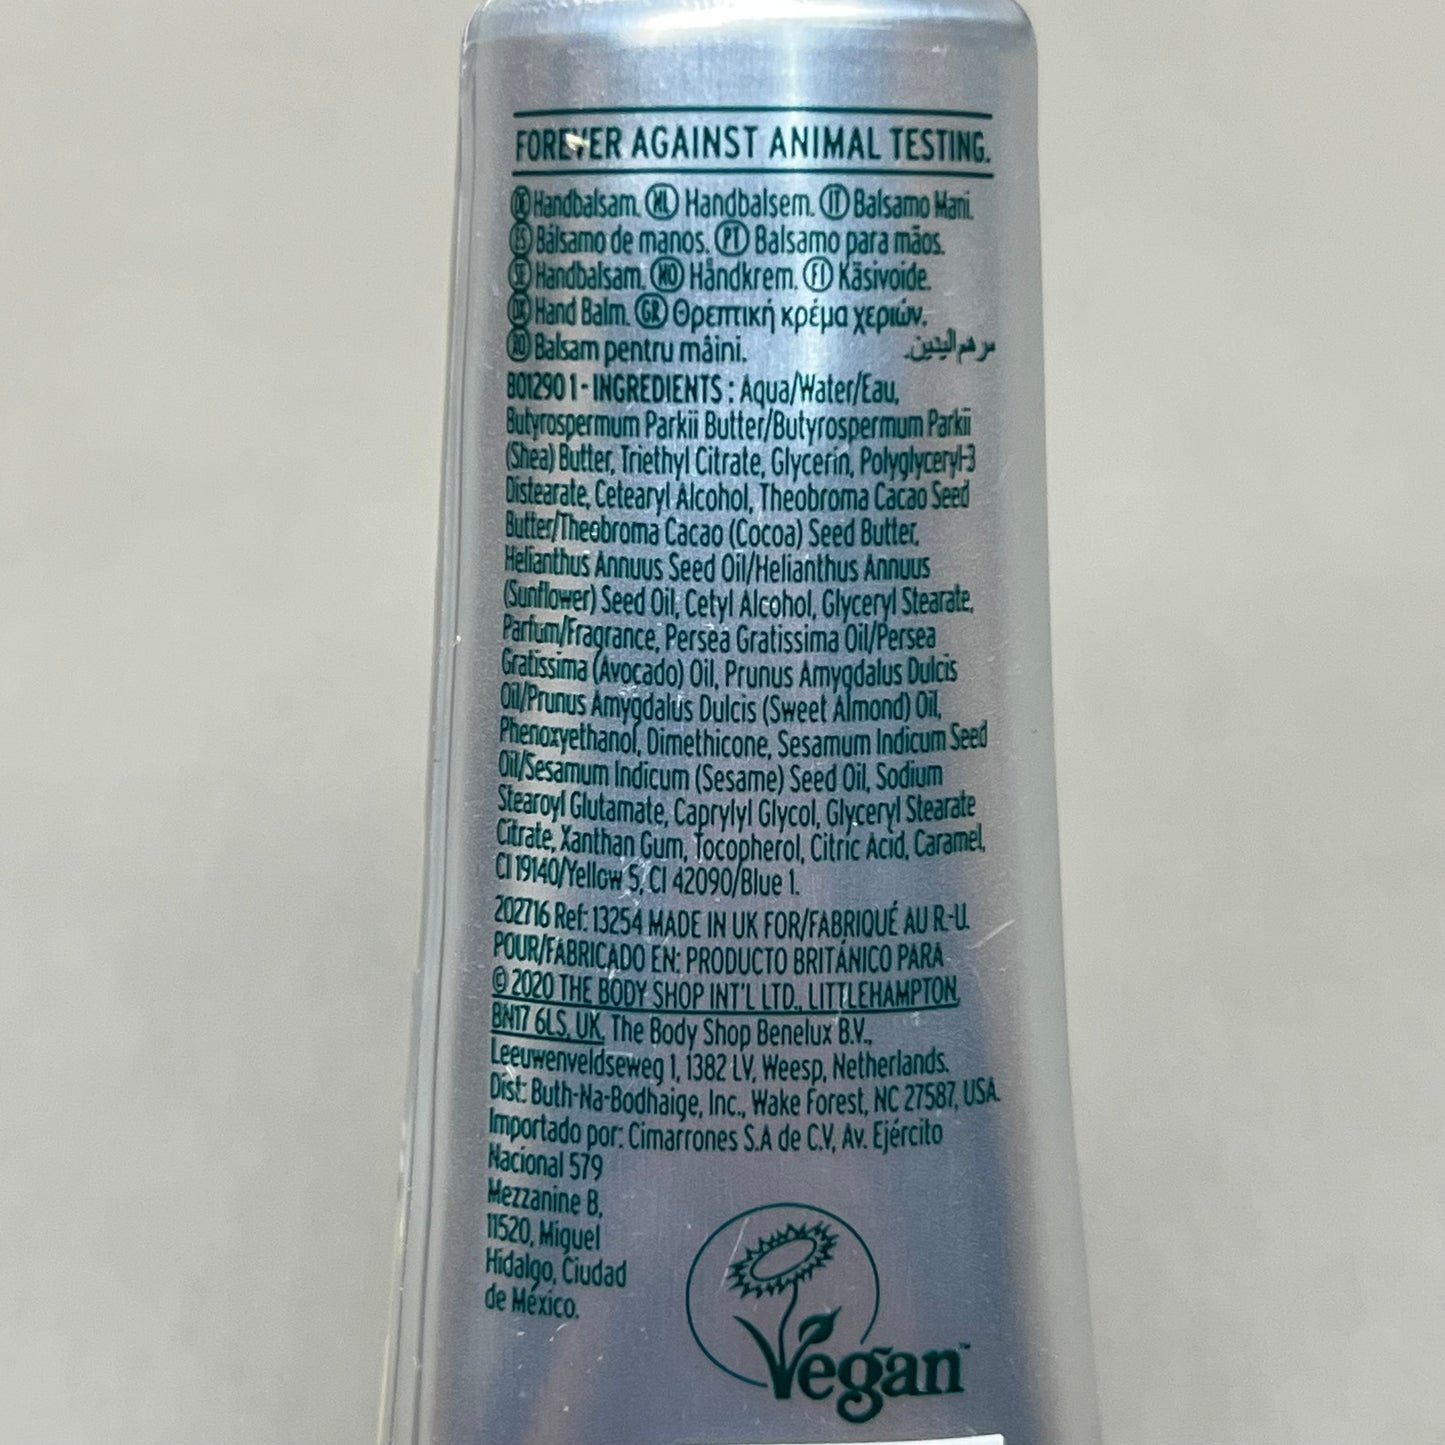 THE BODY SHOP 2 PACK!! Avocado Hand Balm For Dry Skin Vegan 1.0 oz (New)